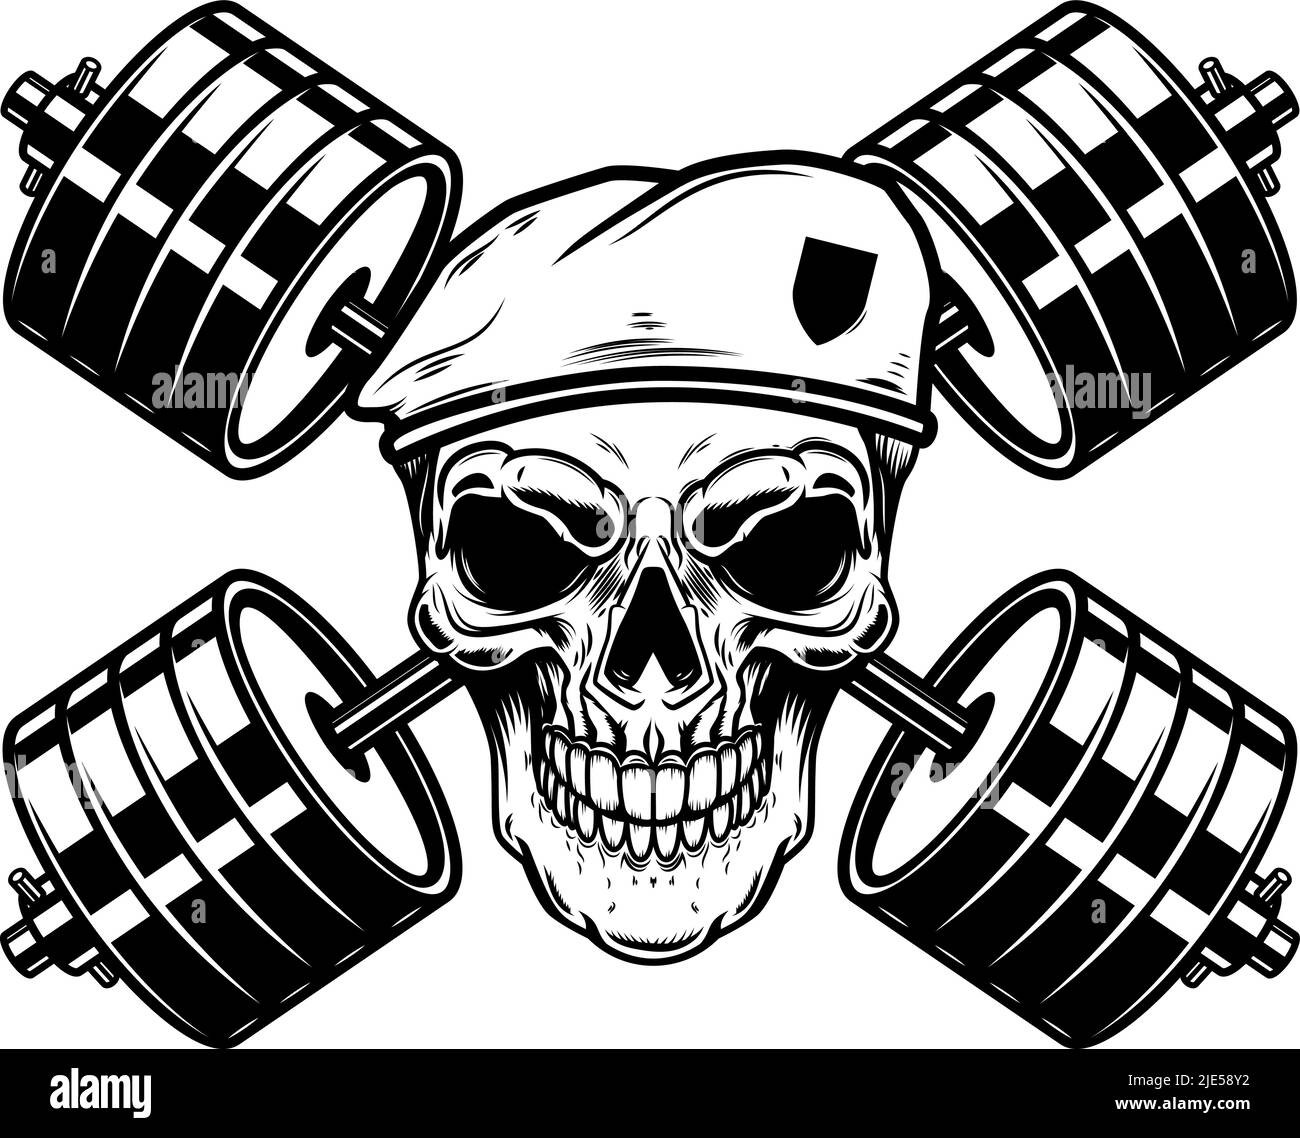 Totenkopf des Soldaten mit gekreuzten Langhanteln. Gestaltungselement für Logo, Etikett, Schild. Vektorgrafik Stock Vektor